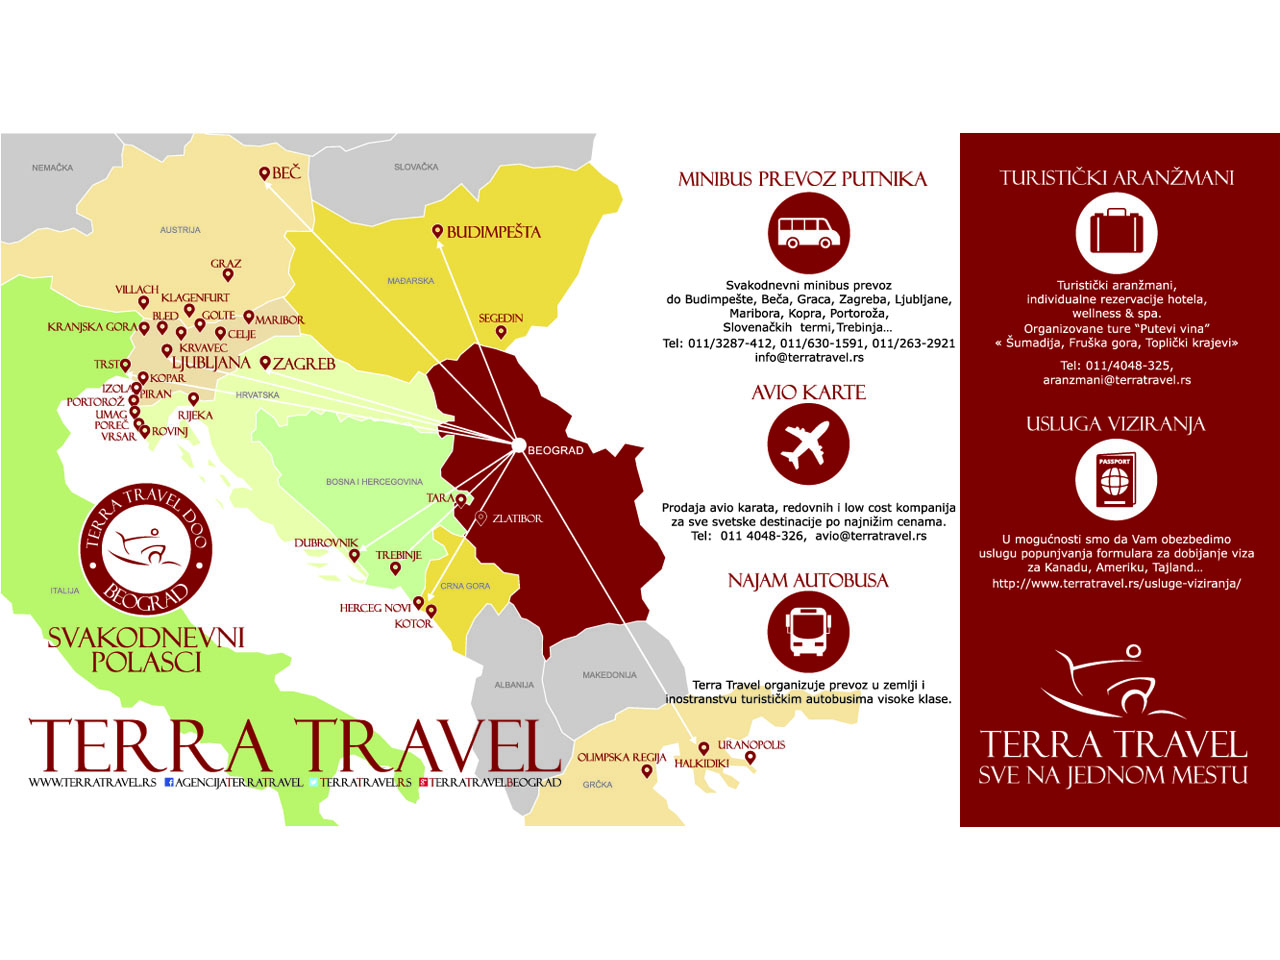 TERRA TRAVEL Travel agencies Beograd